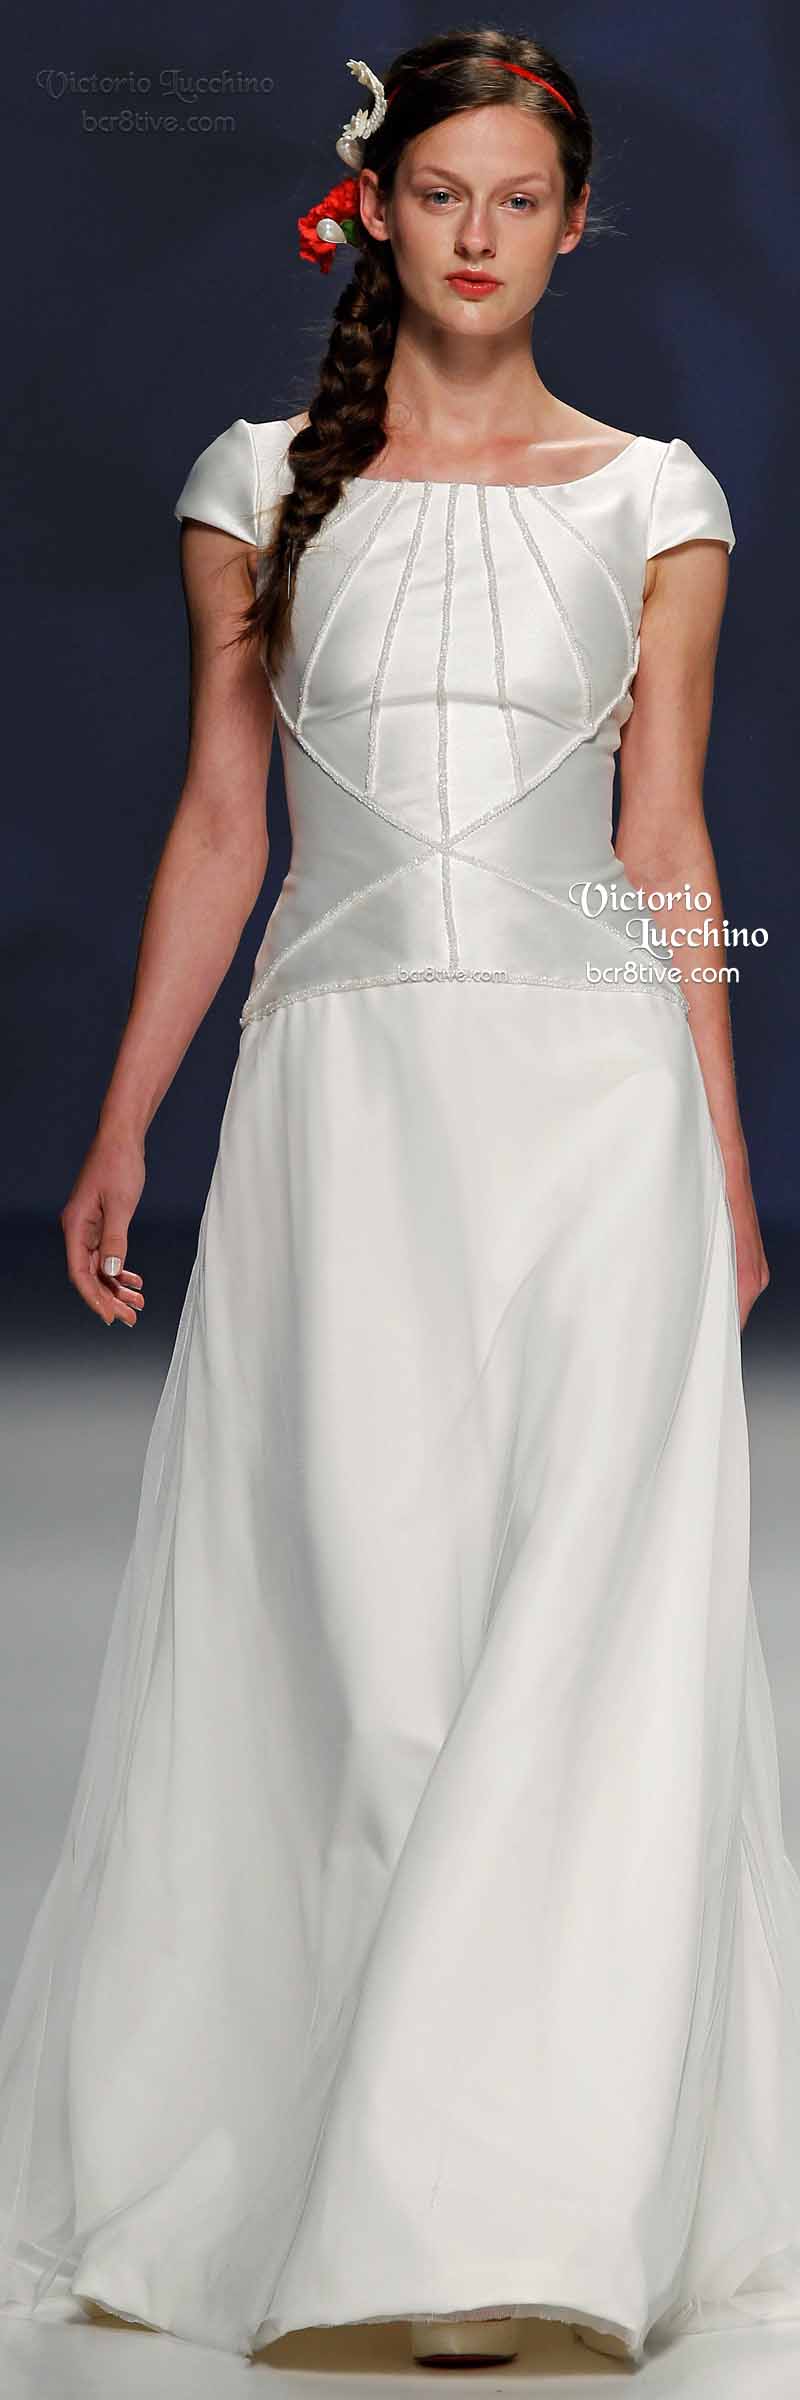 Victorio Lucchino: Barcelona Bridal Week Spring 2015